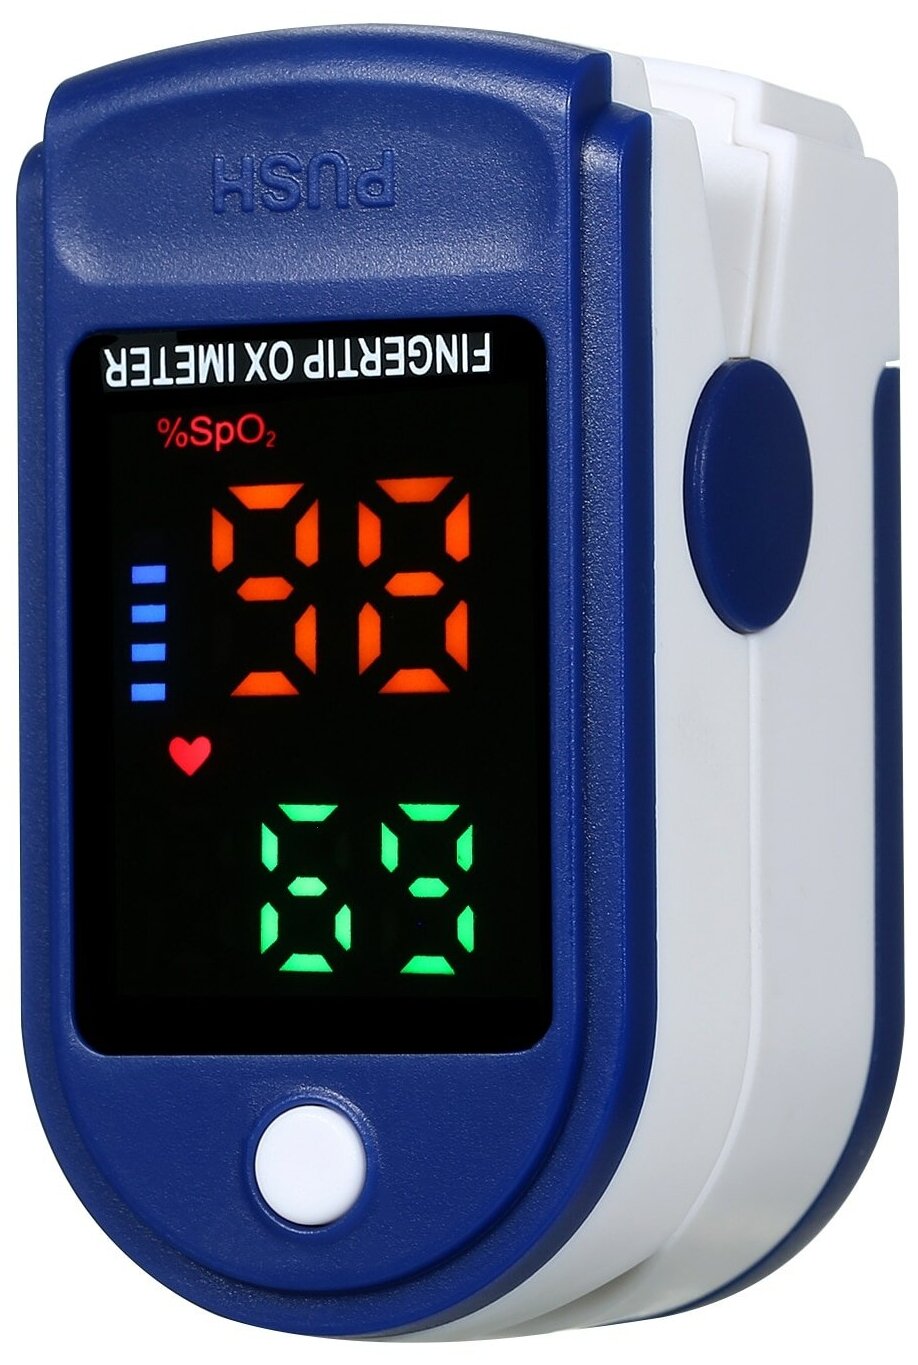 Lk87 pulse oximeter